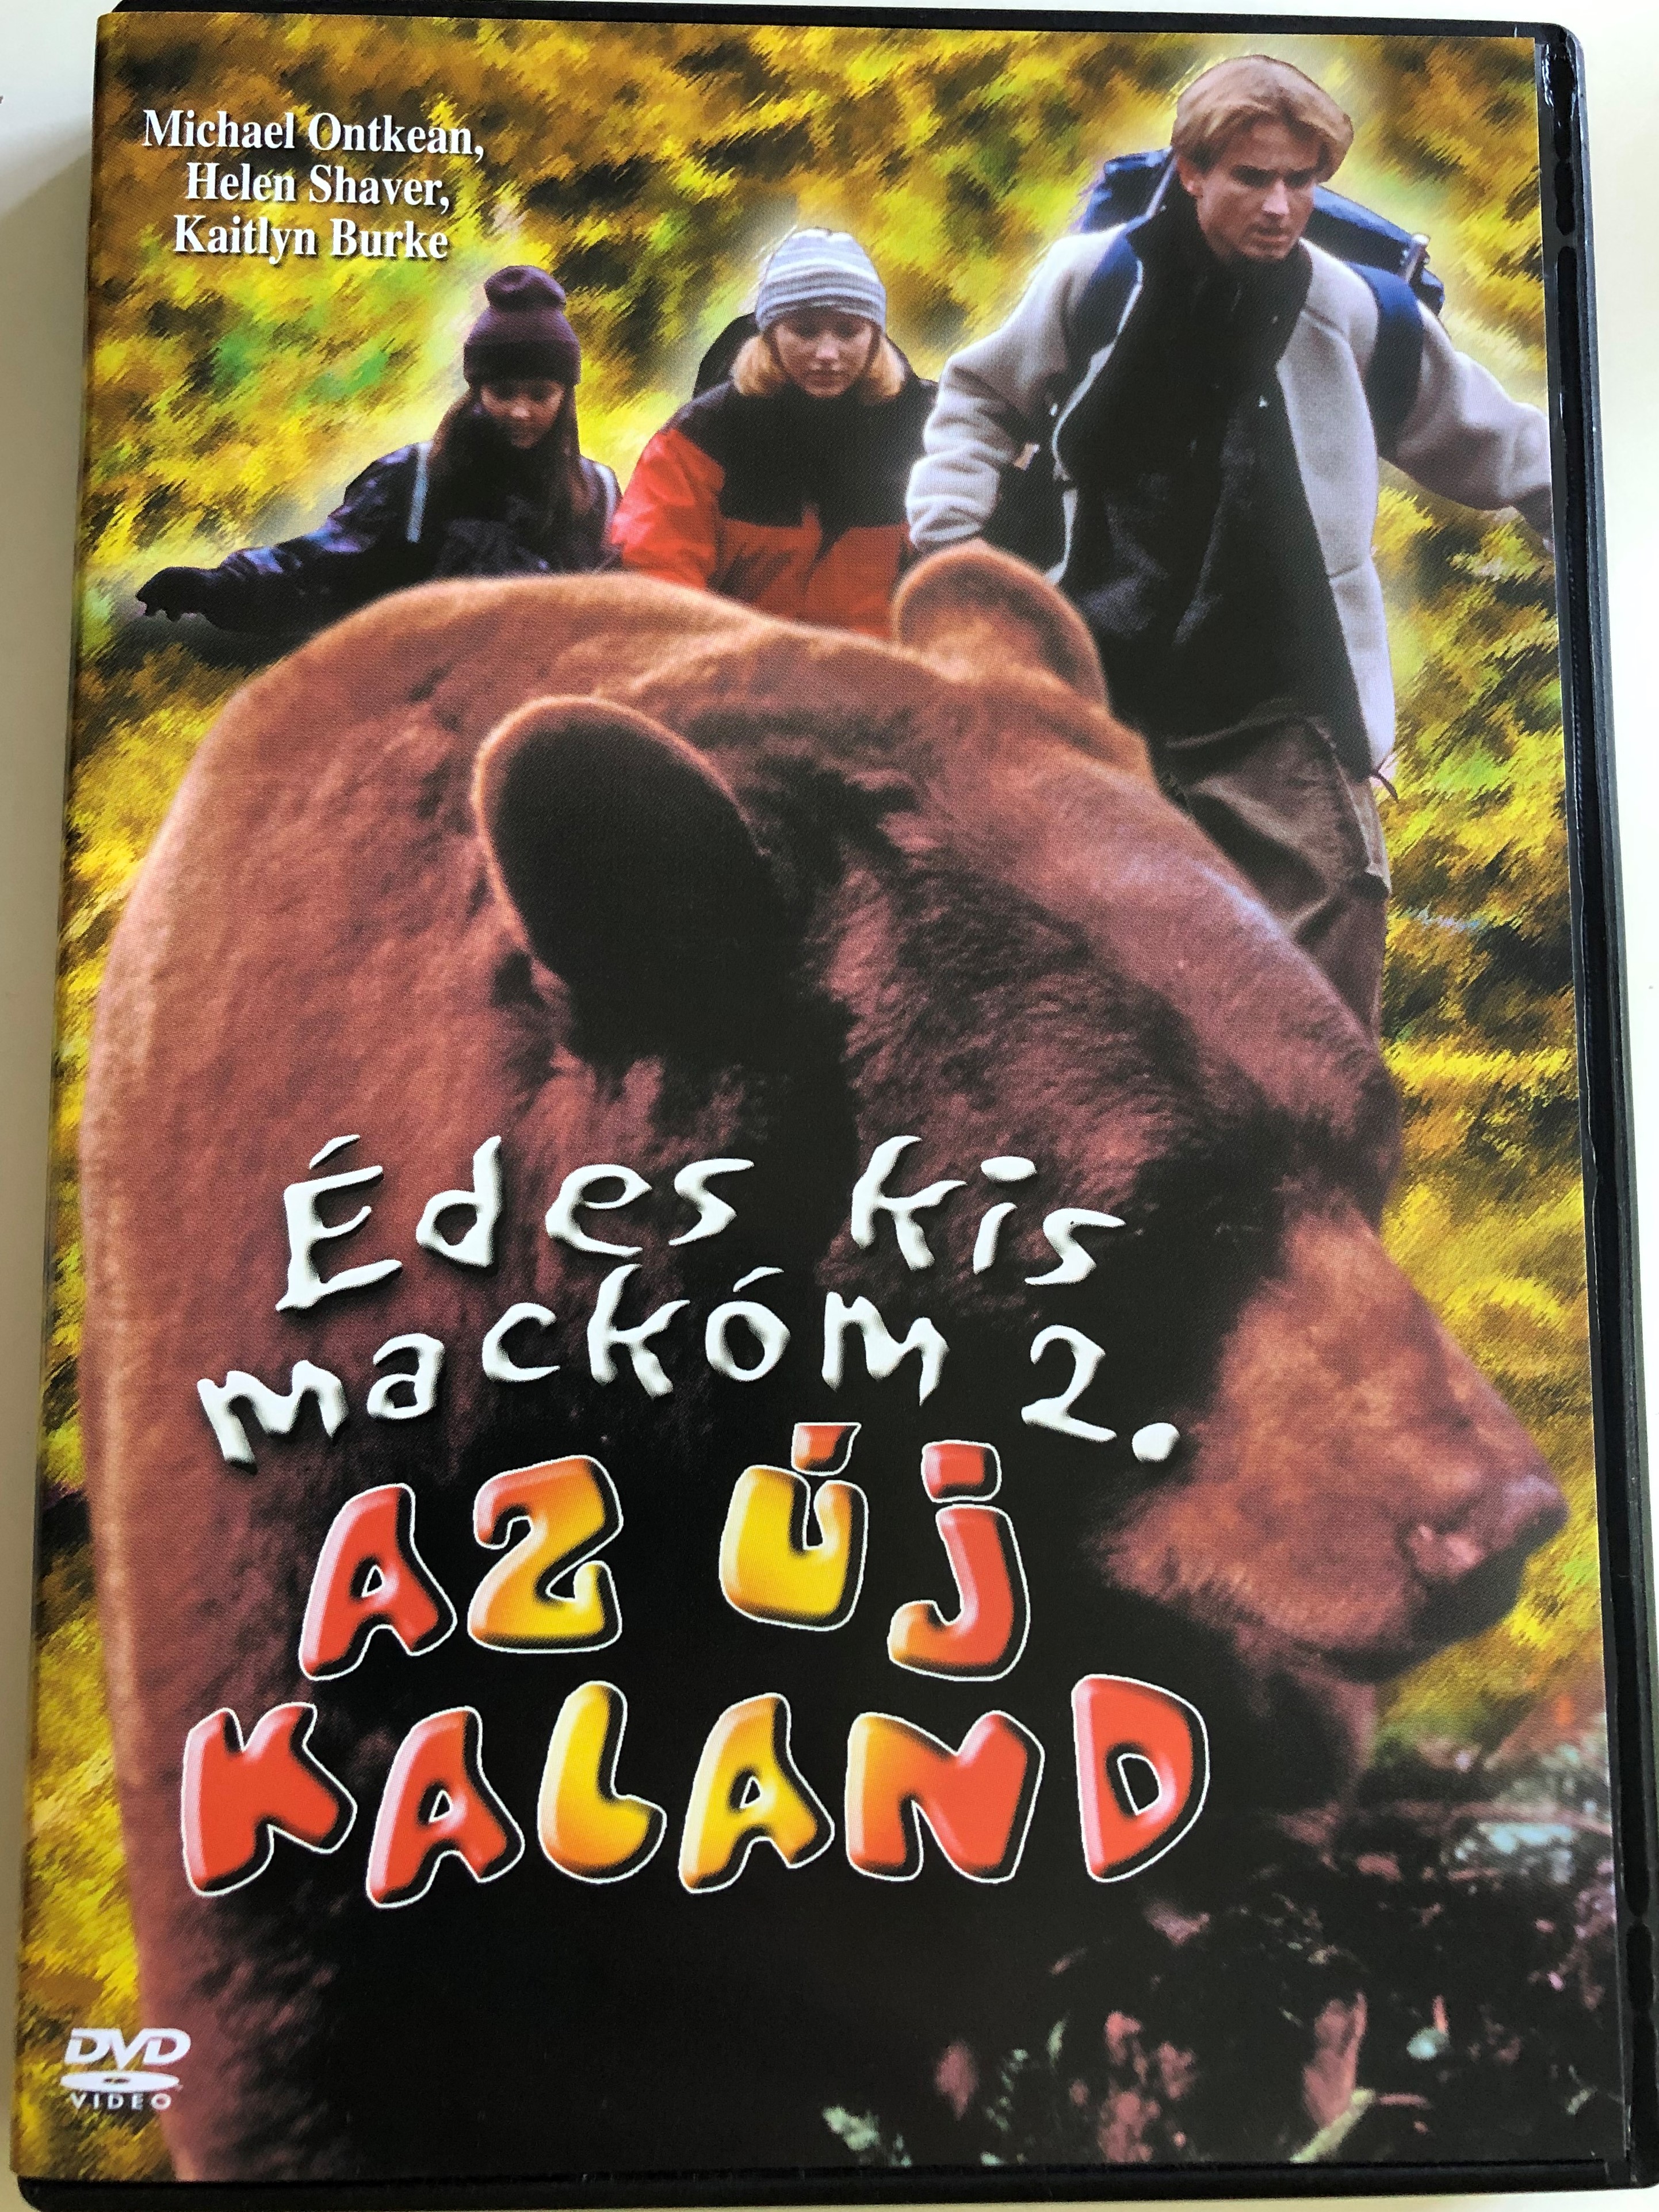 bear-with-me-dvd-2000-des-kis-mack-m-2.-az-j-kaland-directed-by-paul-ziller-starring-michael-ontkean-helen-shaver-kaitlyn-burke-kiberley-warnat-erich-johnson-1-.jpg